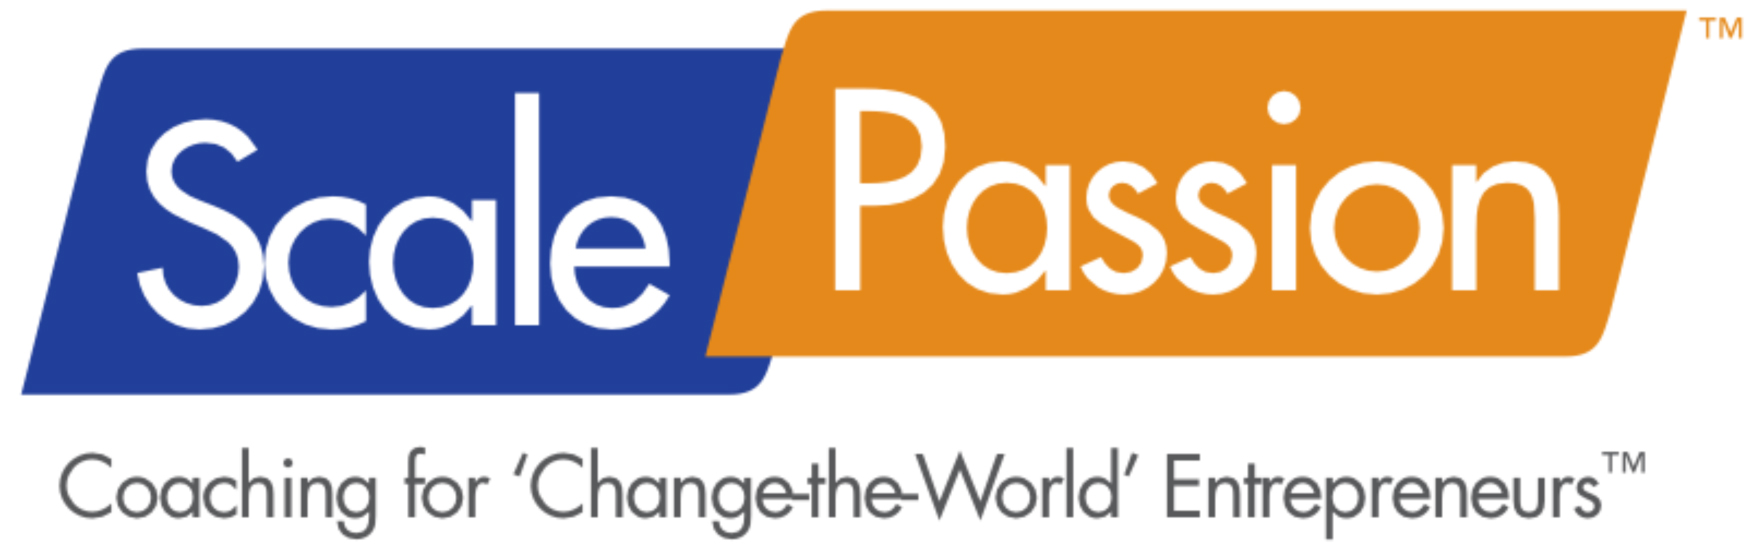 ScalePassion logo